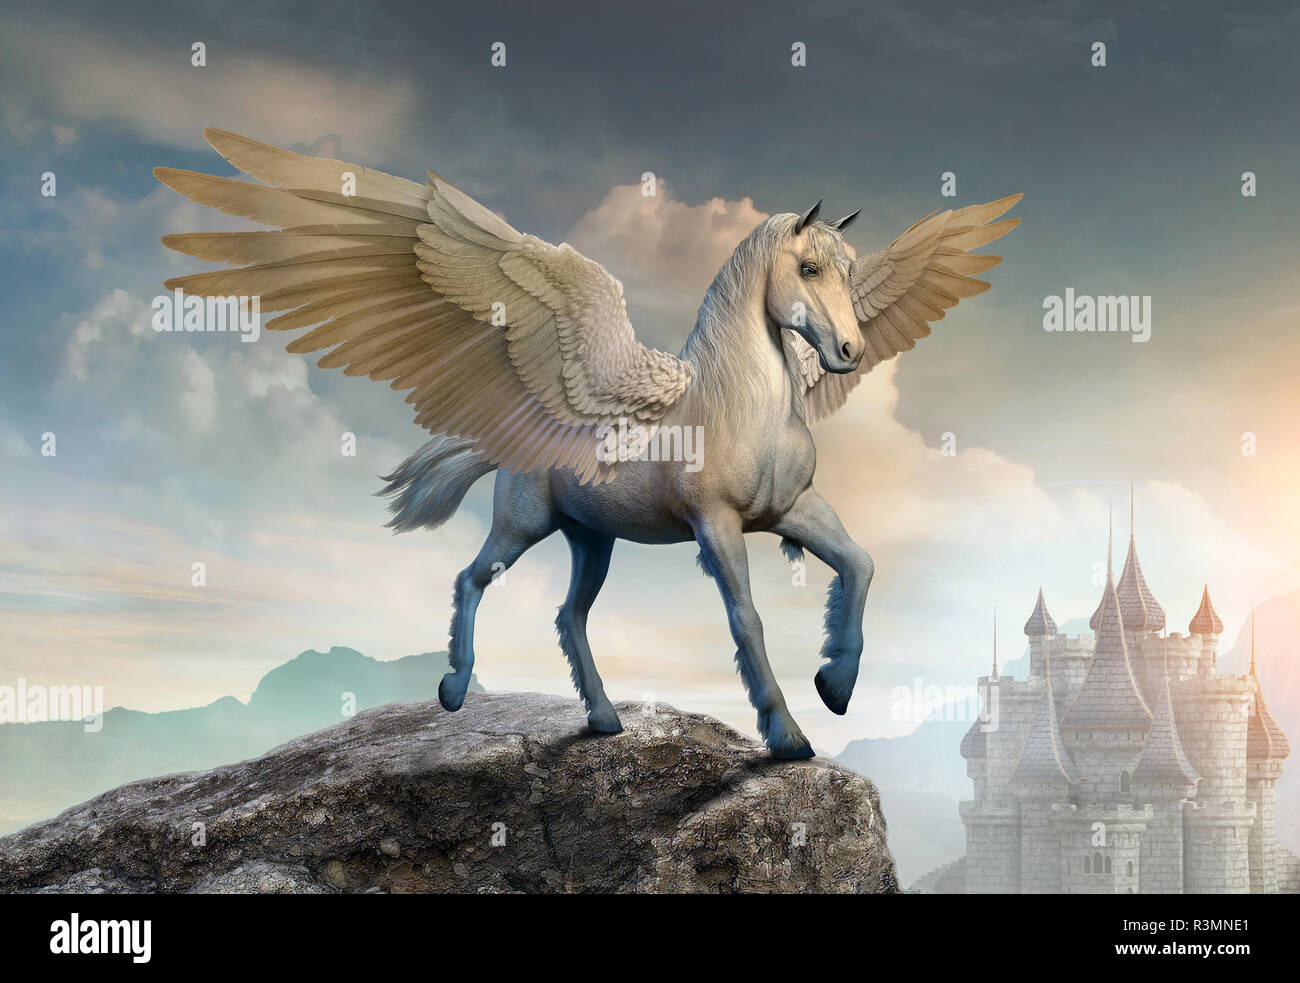 Pegasus scene 3D illustration Stock Photo